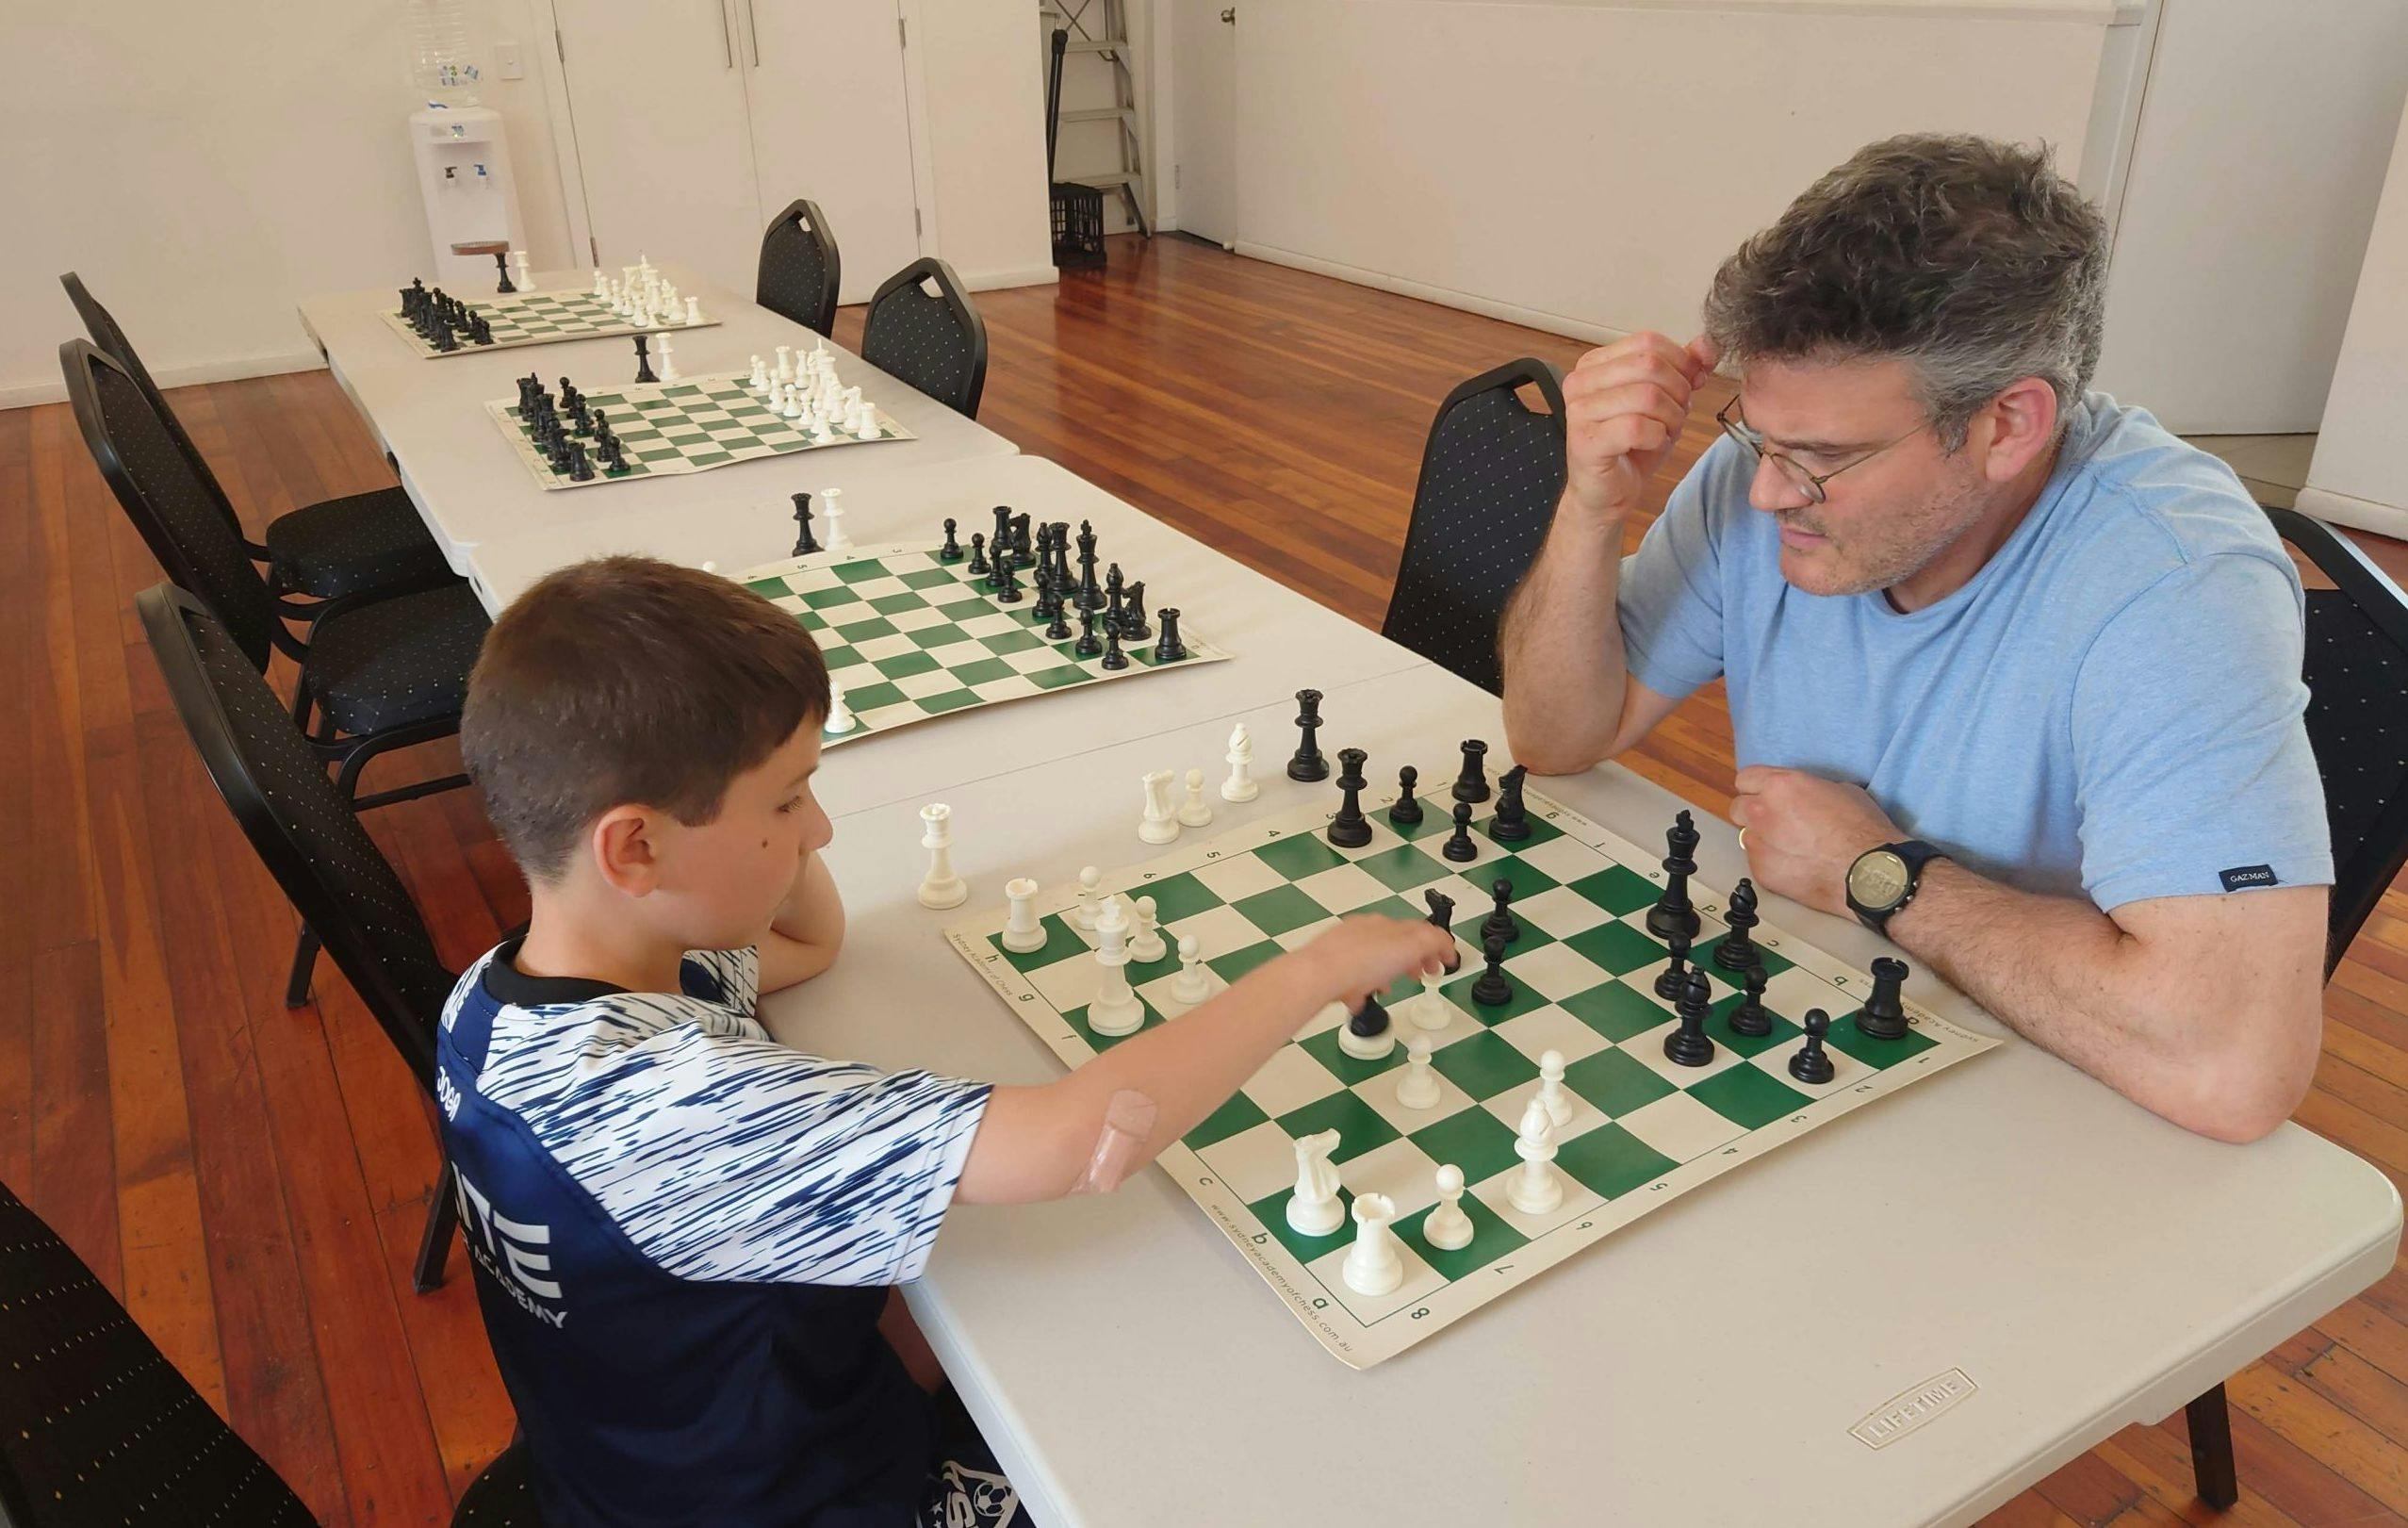 A young boy versing an older man at chess.